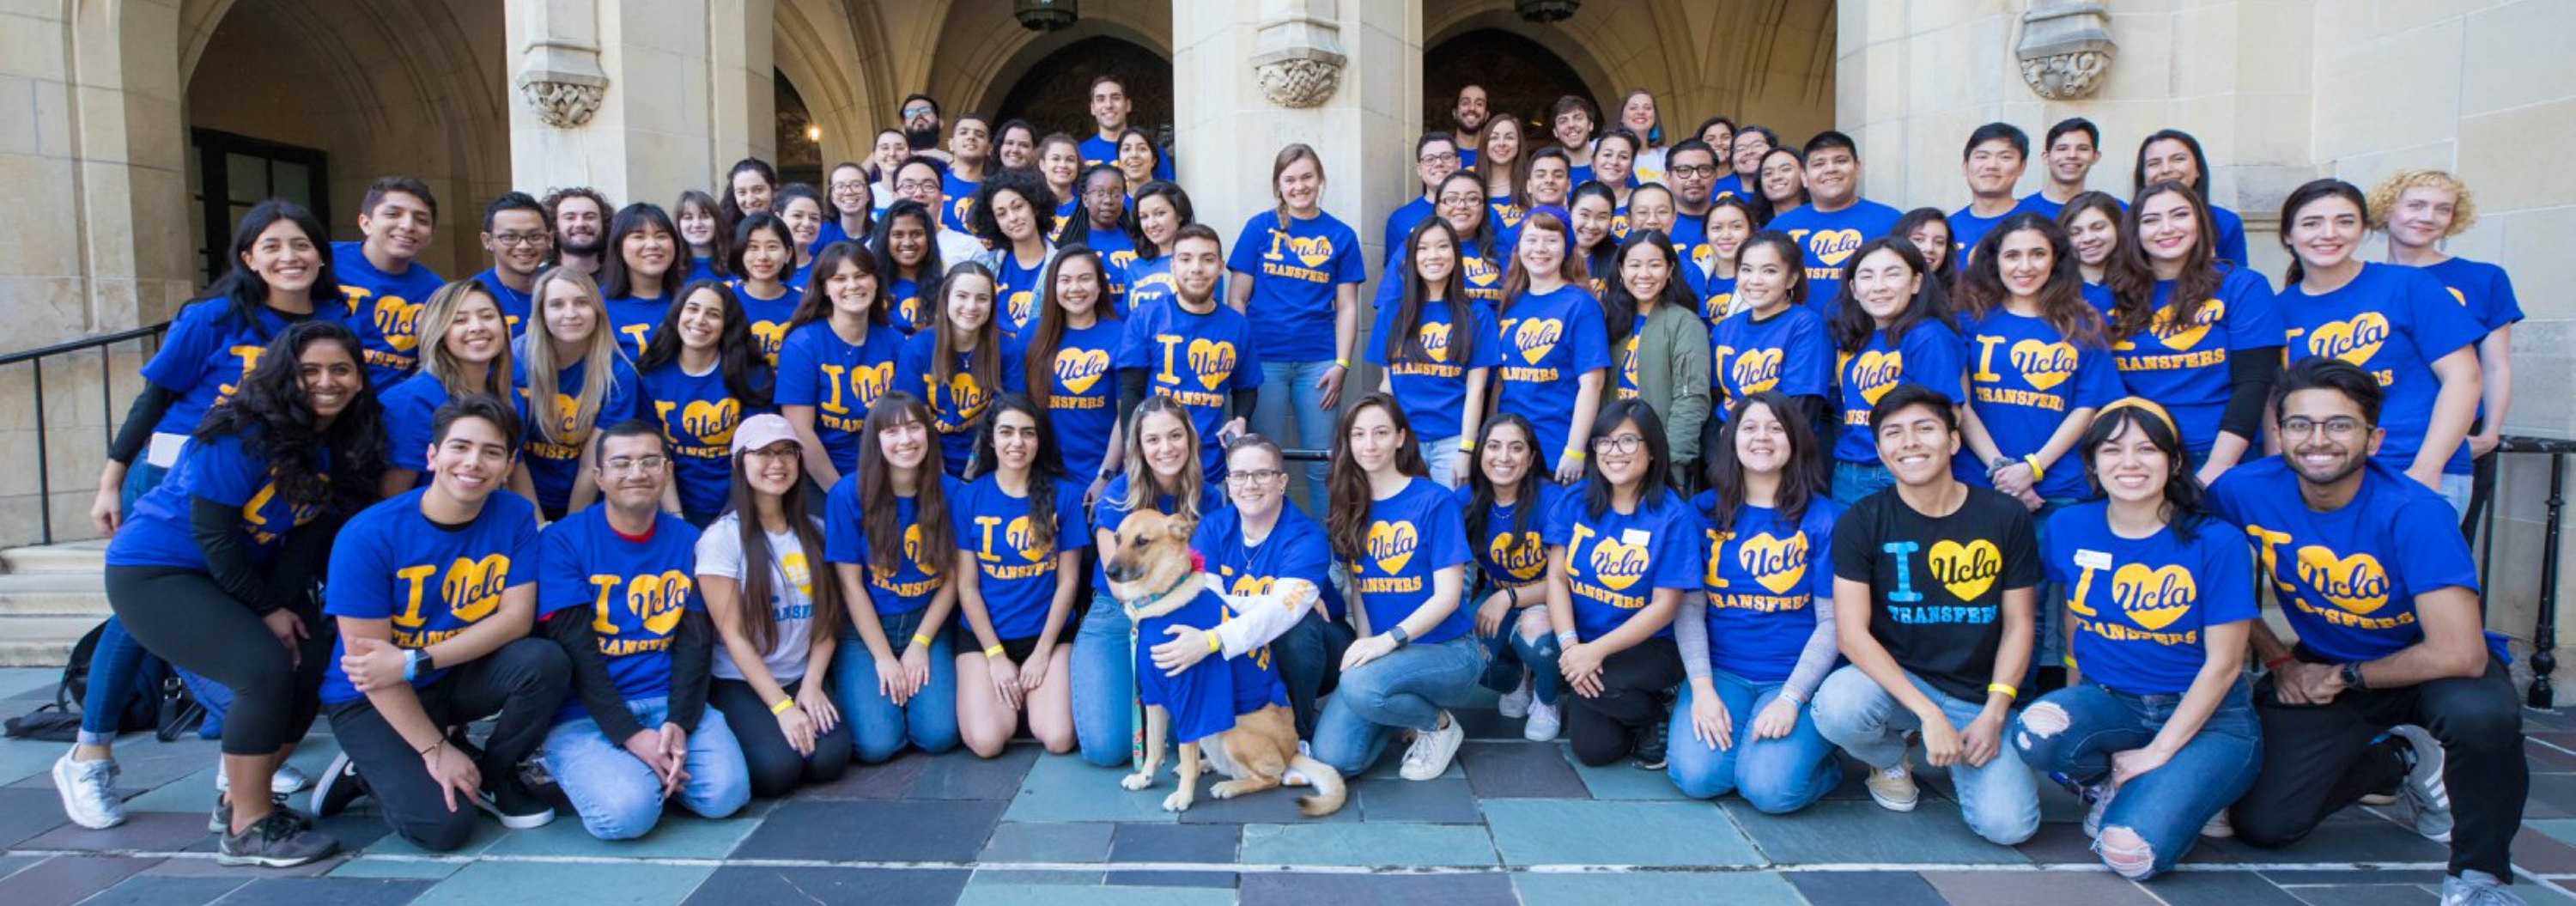 Support Mentorship at UCLA 2021-2022